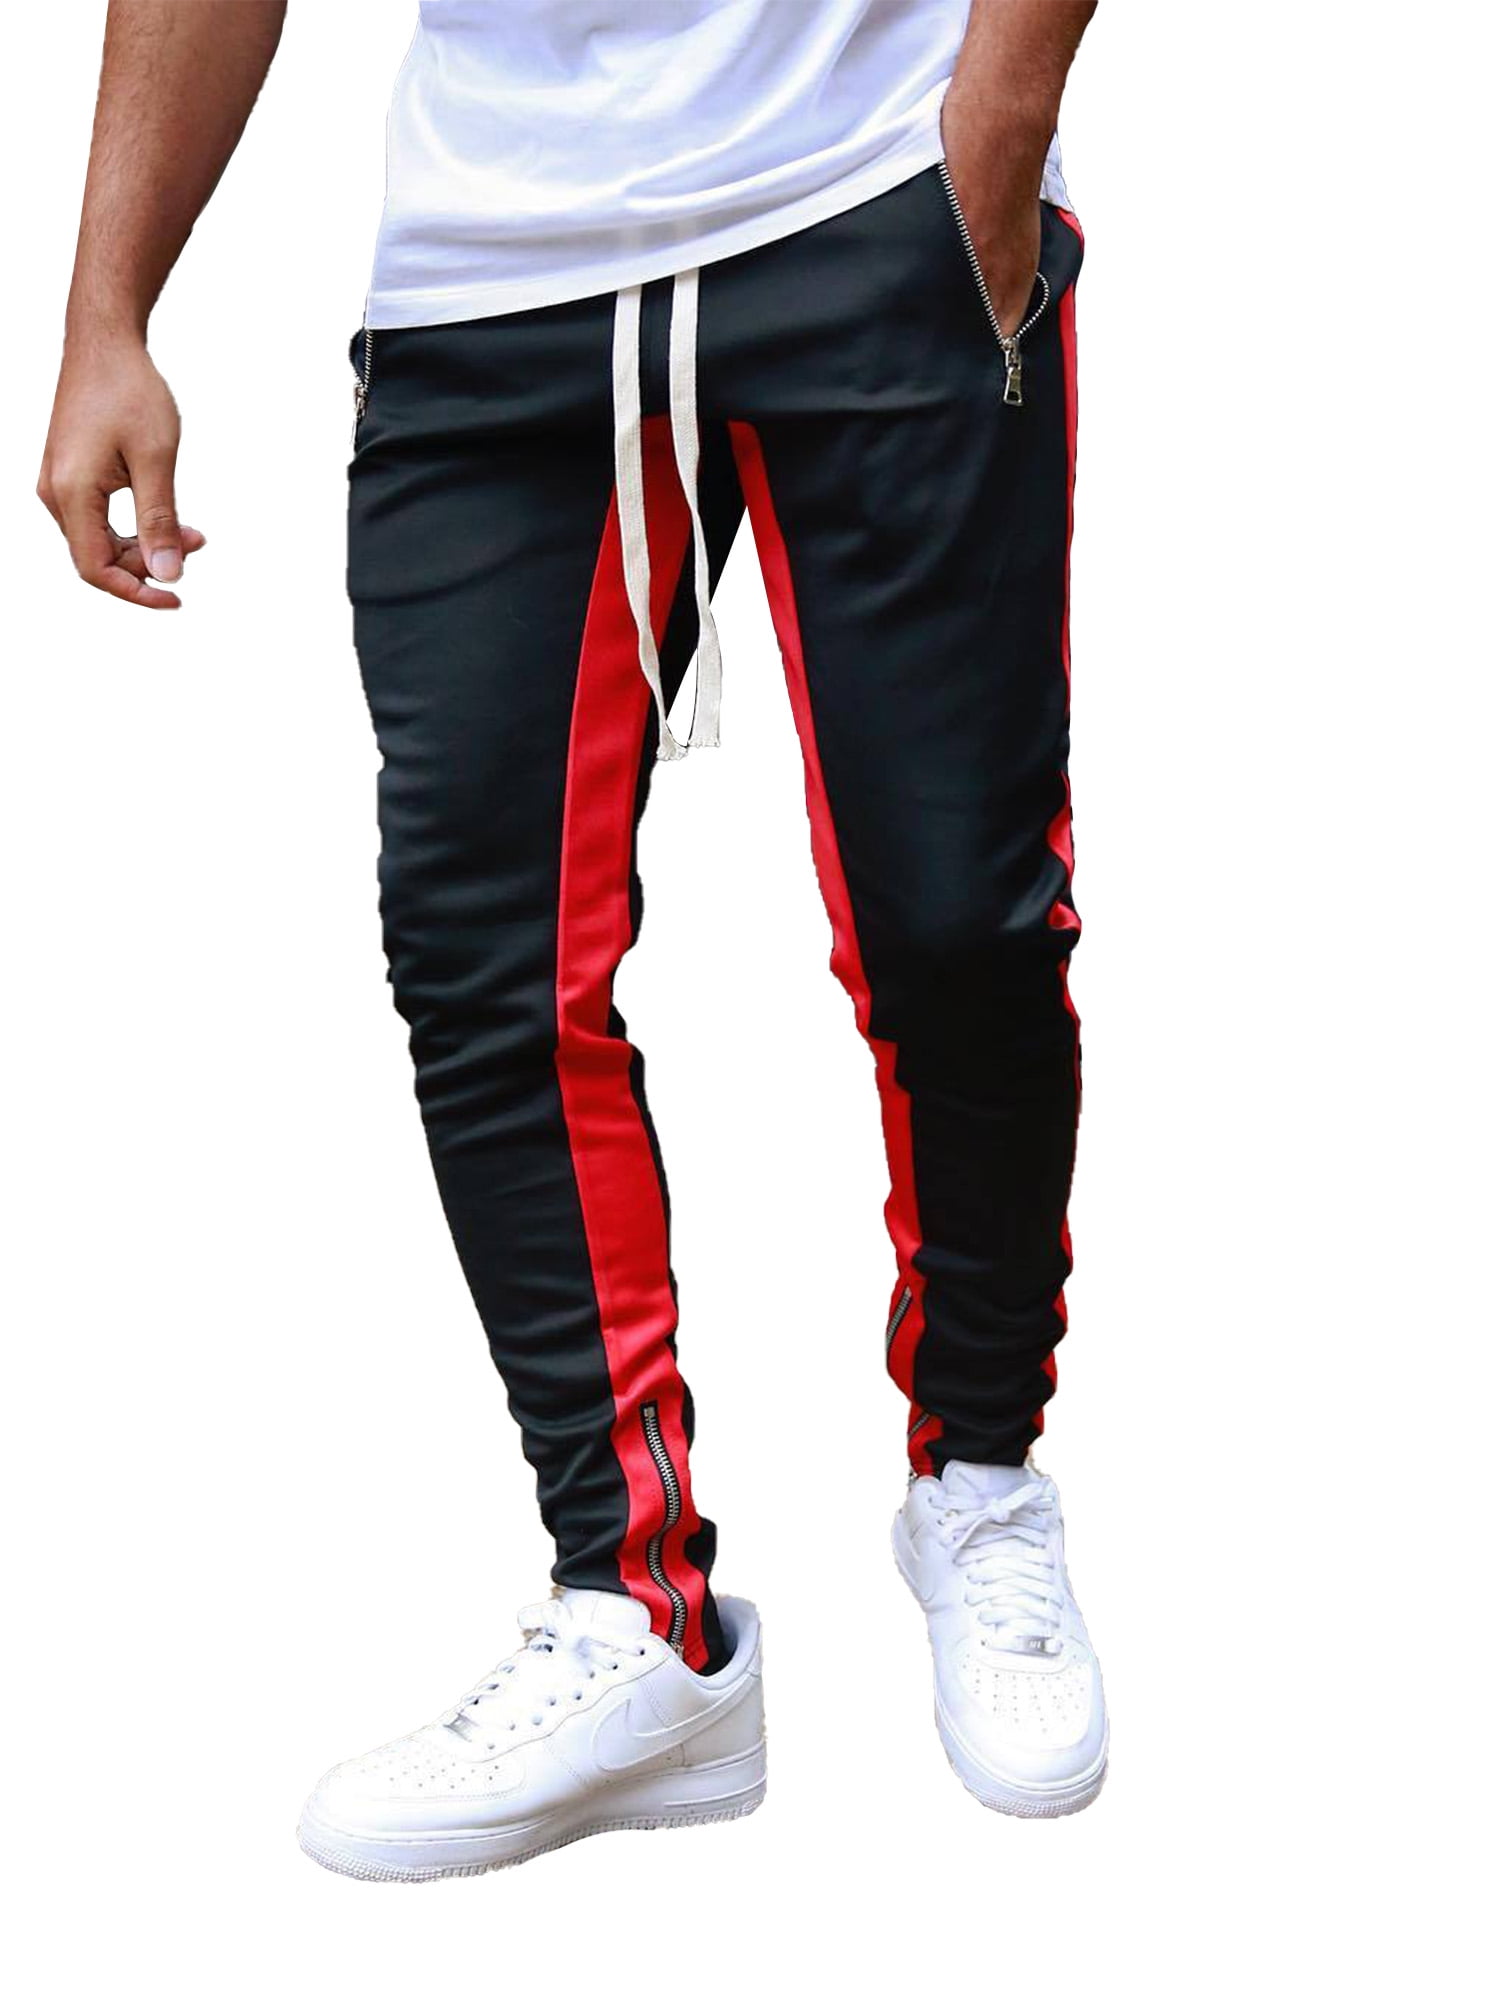 Hip Hop Track Pants for Mens Teen Boys Slim Fit Zipper Pockets